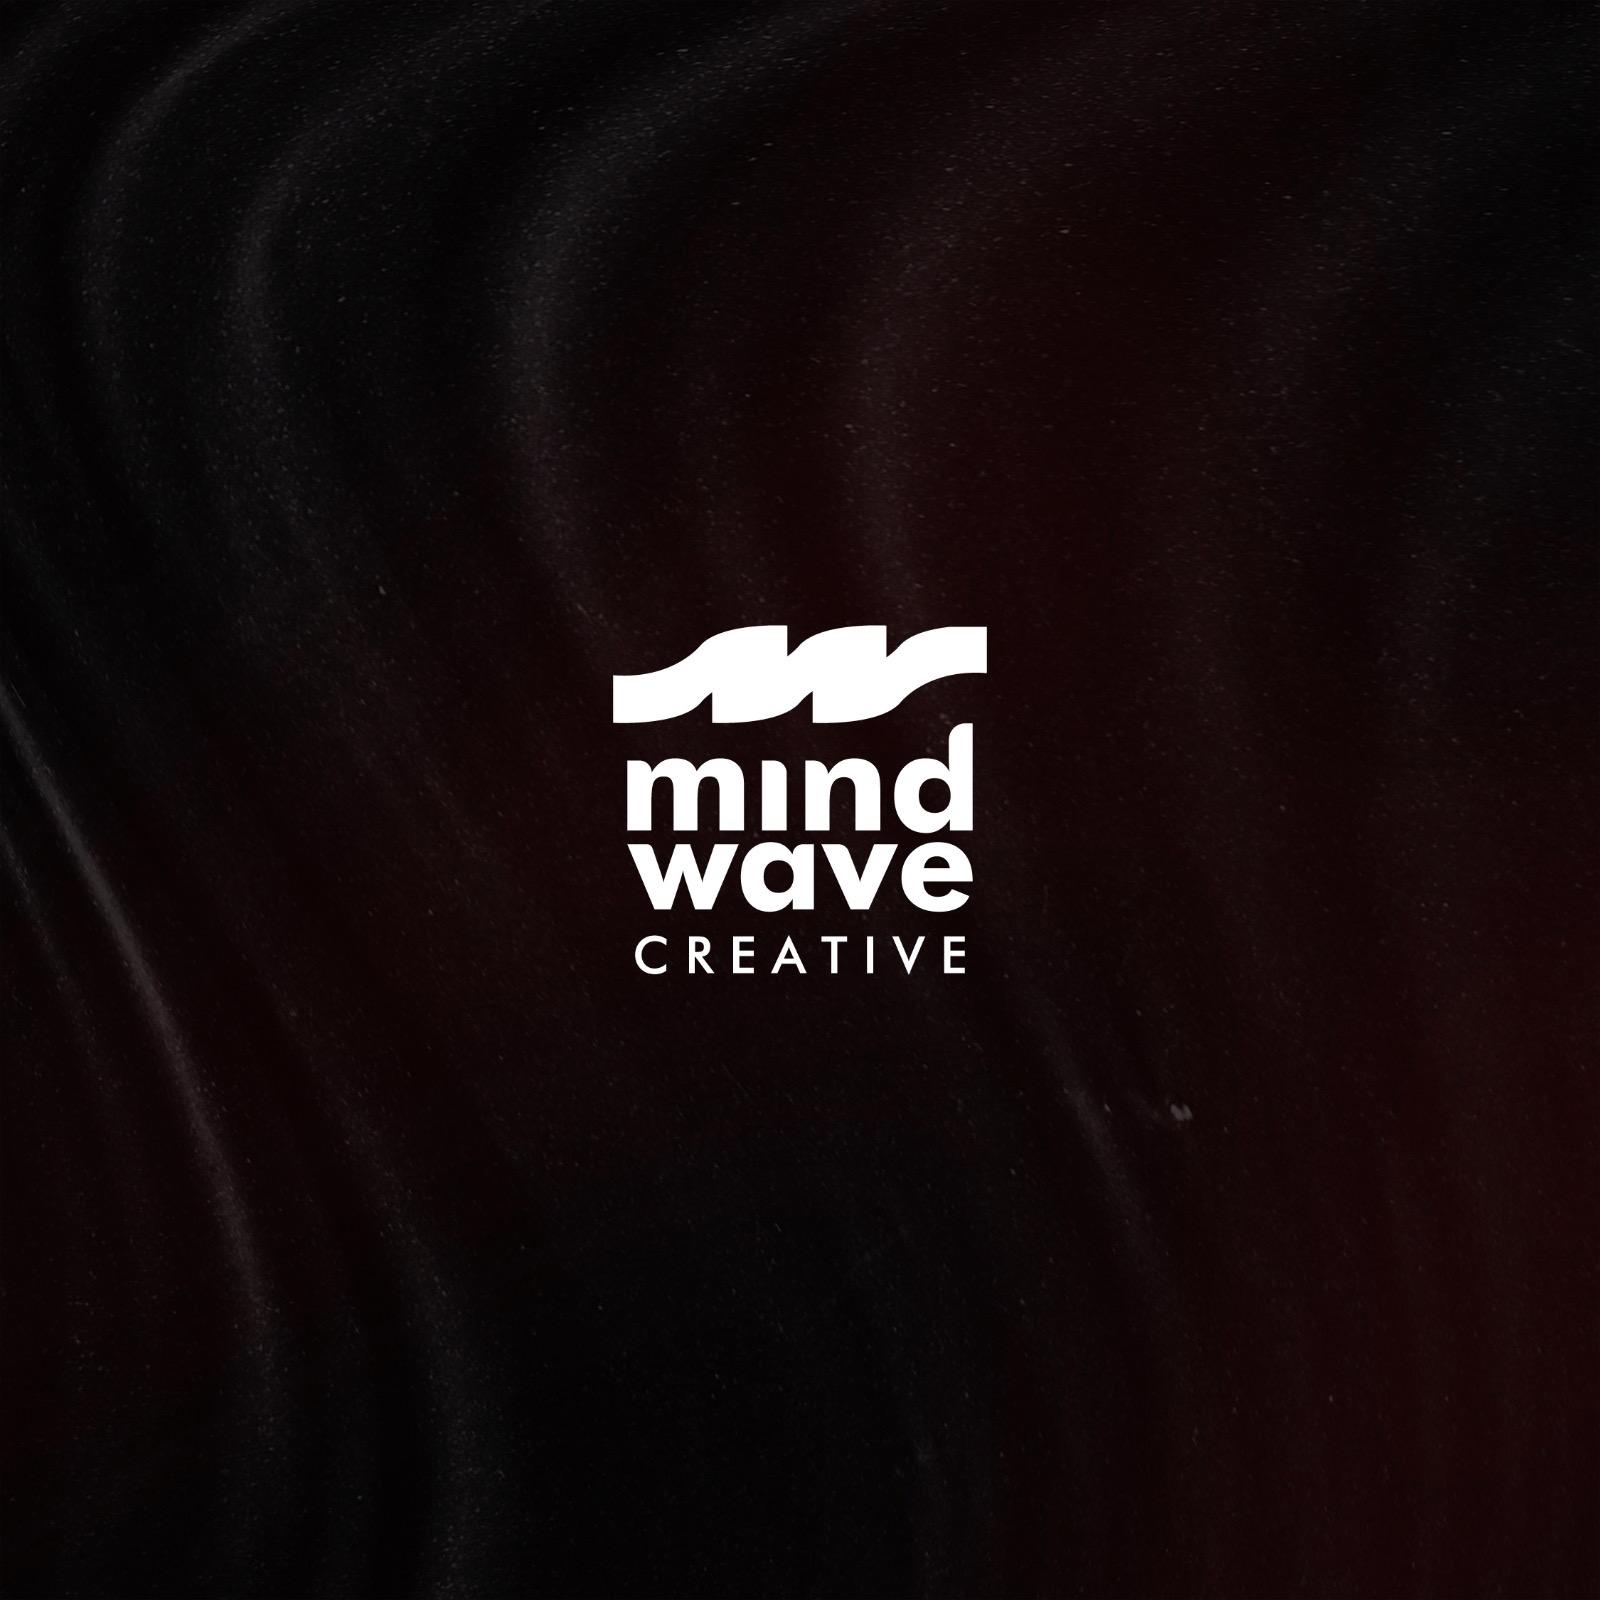 alto-london-art-web-design-logo-digital-mindwave